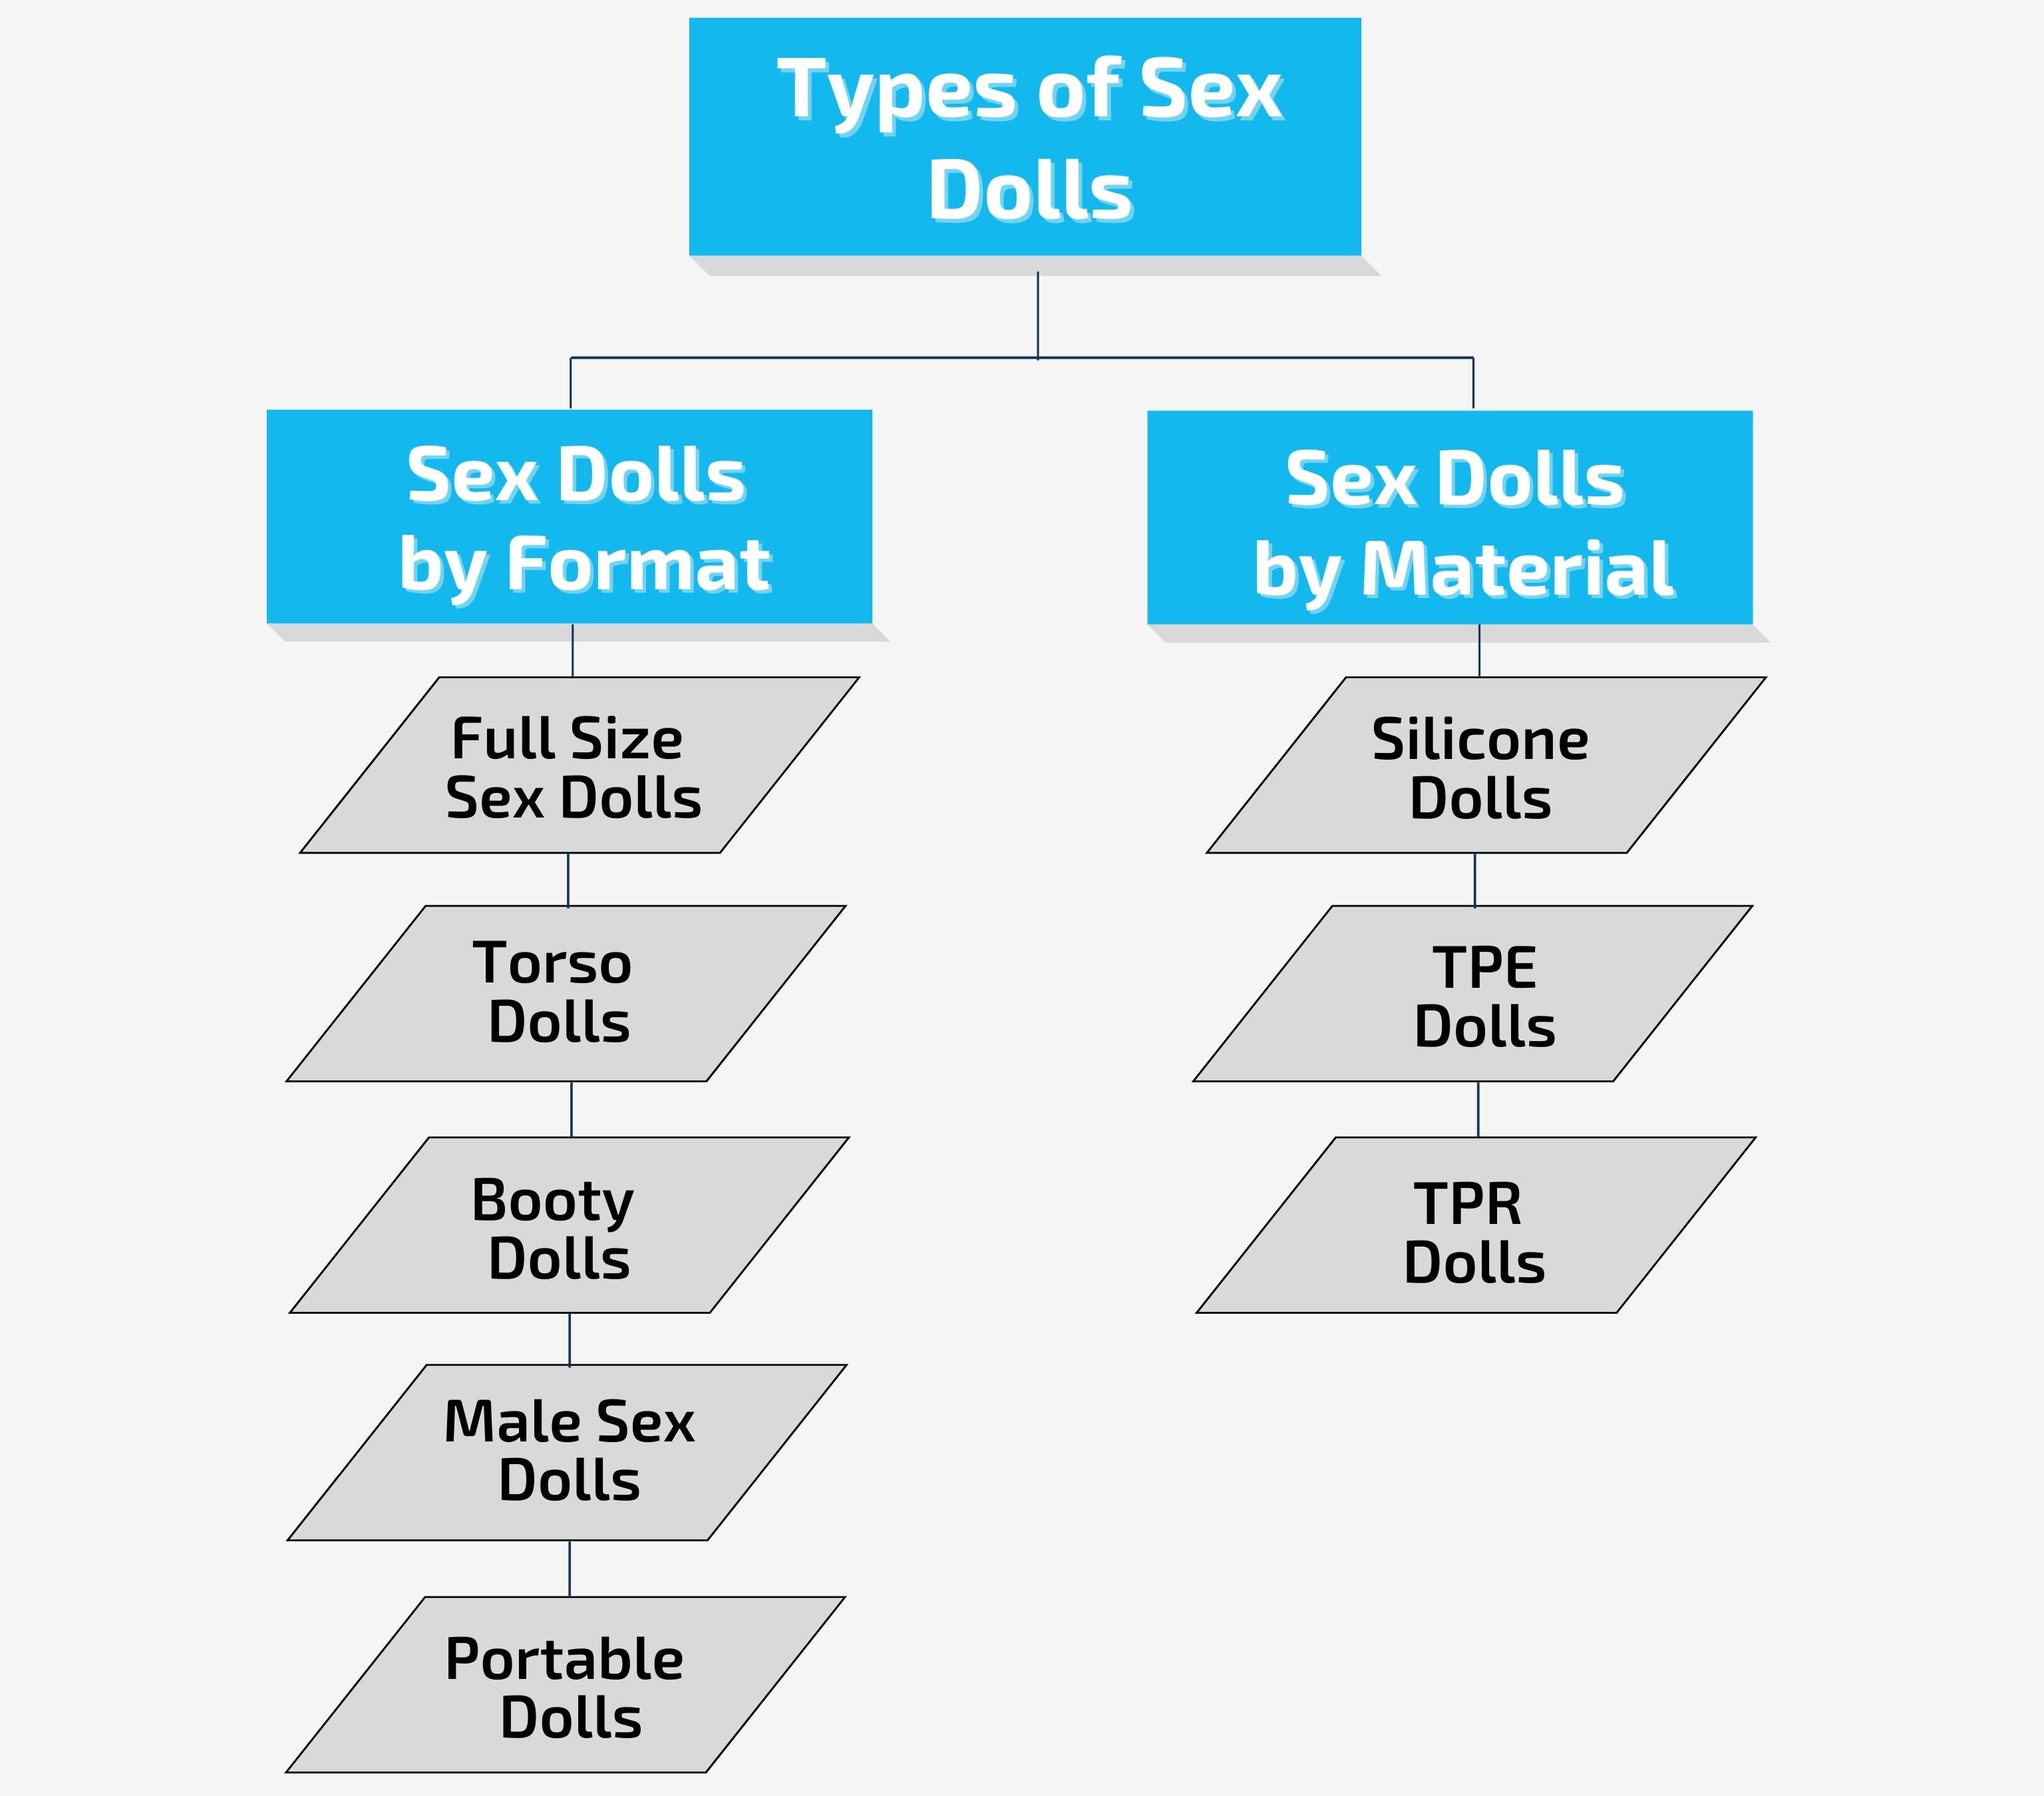 Types of Sex Dolls